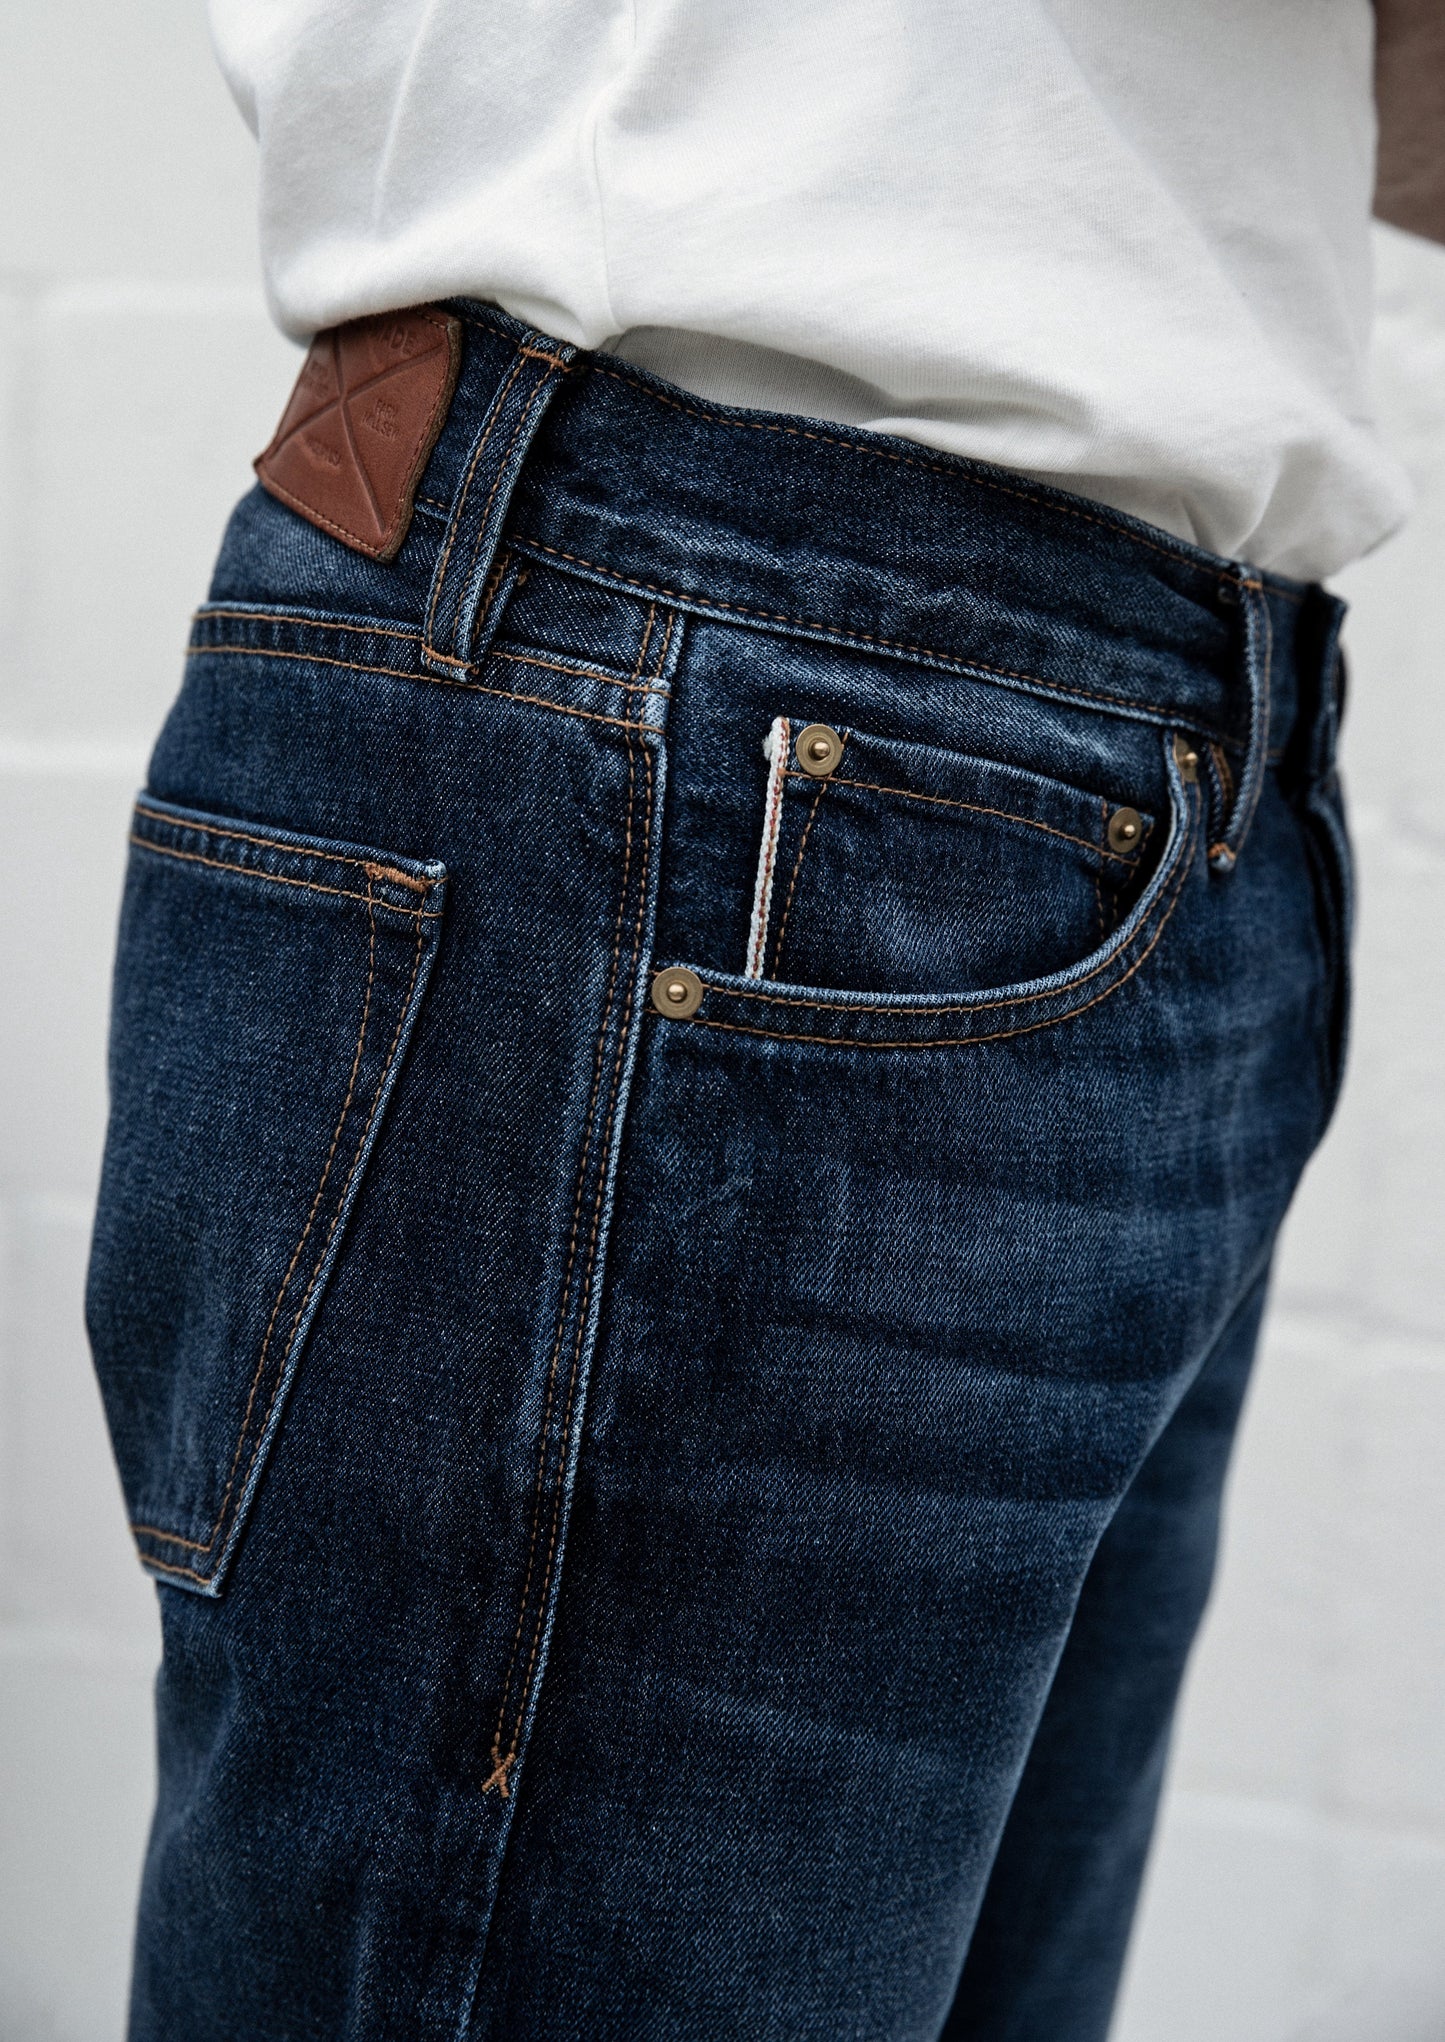 Jack Vidalia Mills 14oz Selvedge Jeans Ocean Wash| 100% American Made Cotton